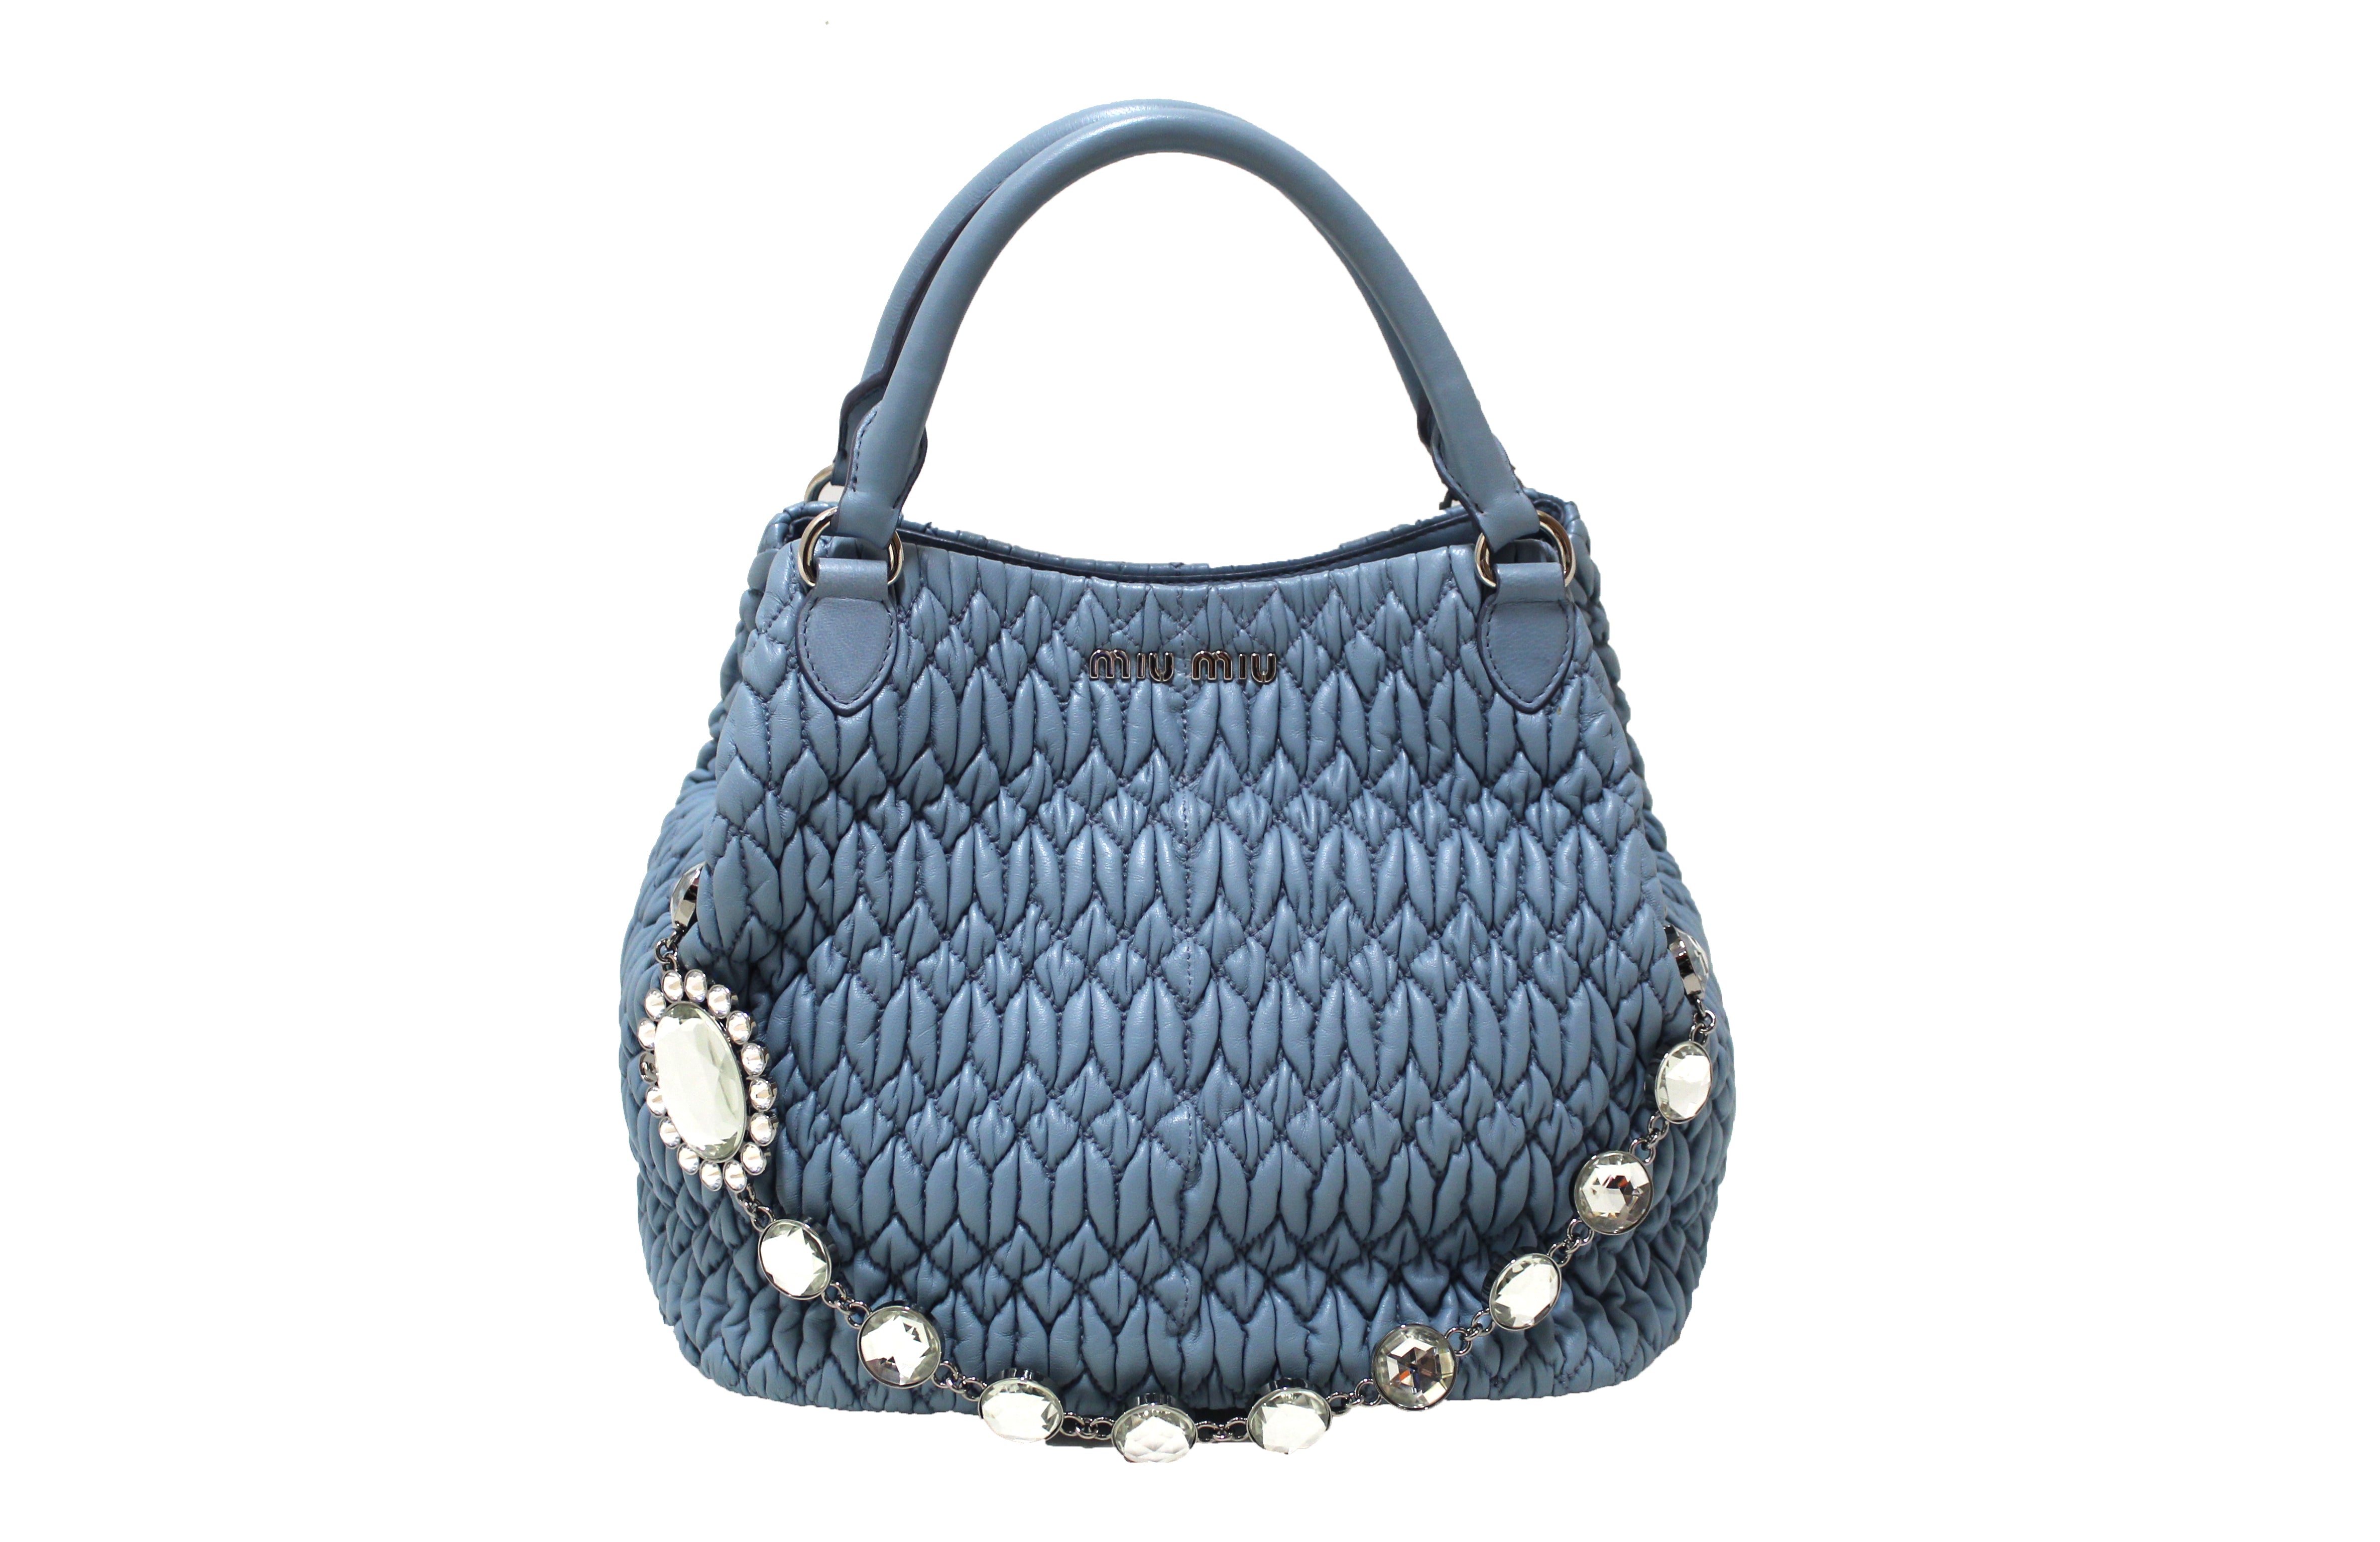 Authentic Miu Miu Crystal Blue Cloqué Nappa Leather Handbag